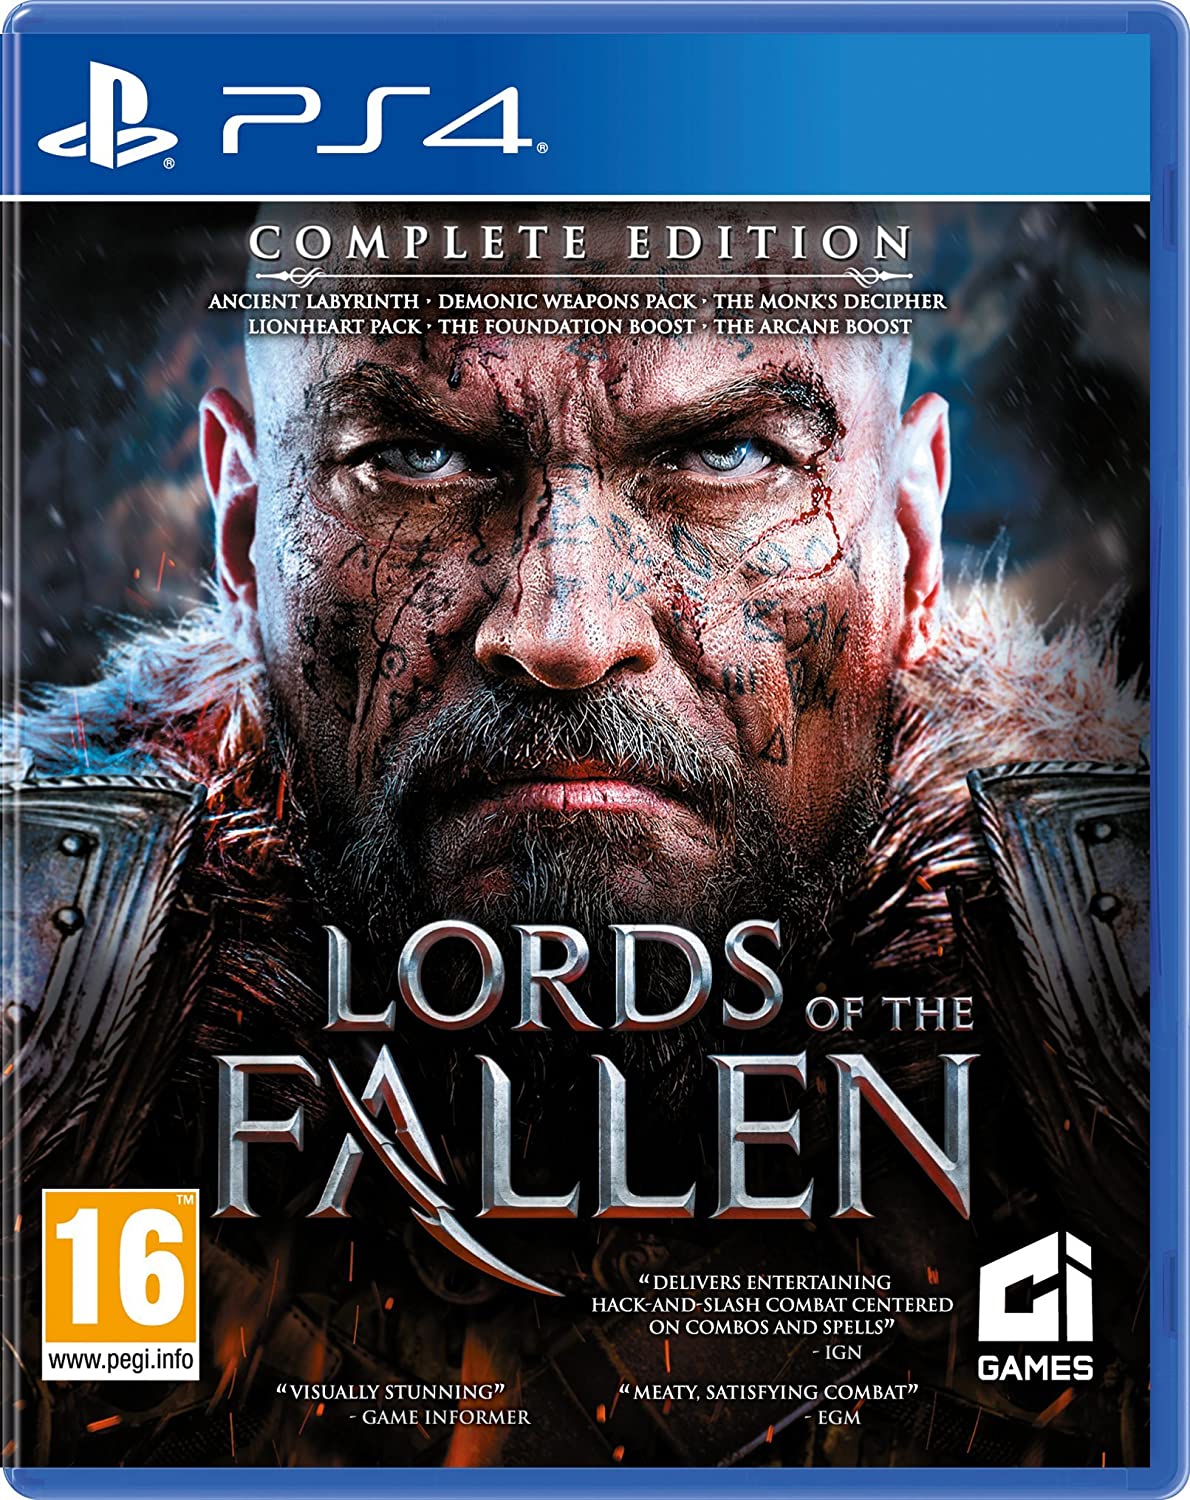 okładka gry na PS4 pod tytułem Lords of the Fallen